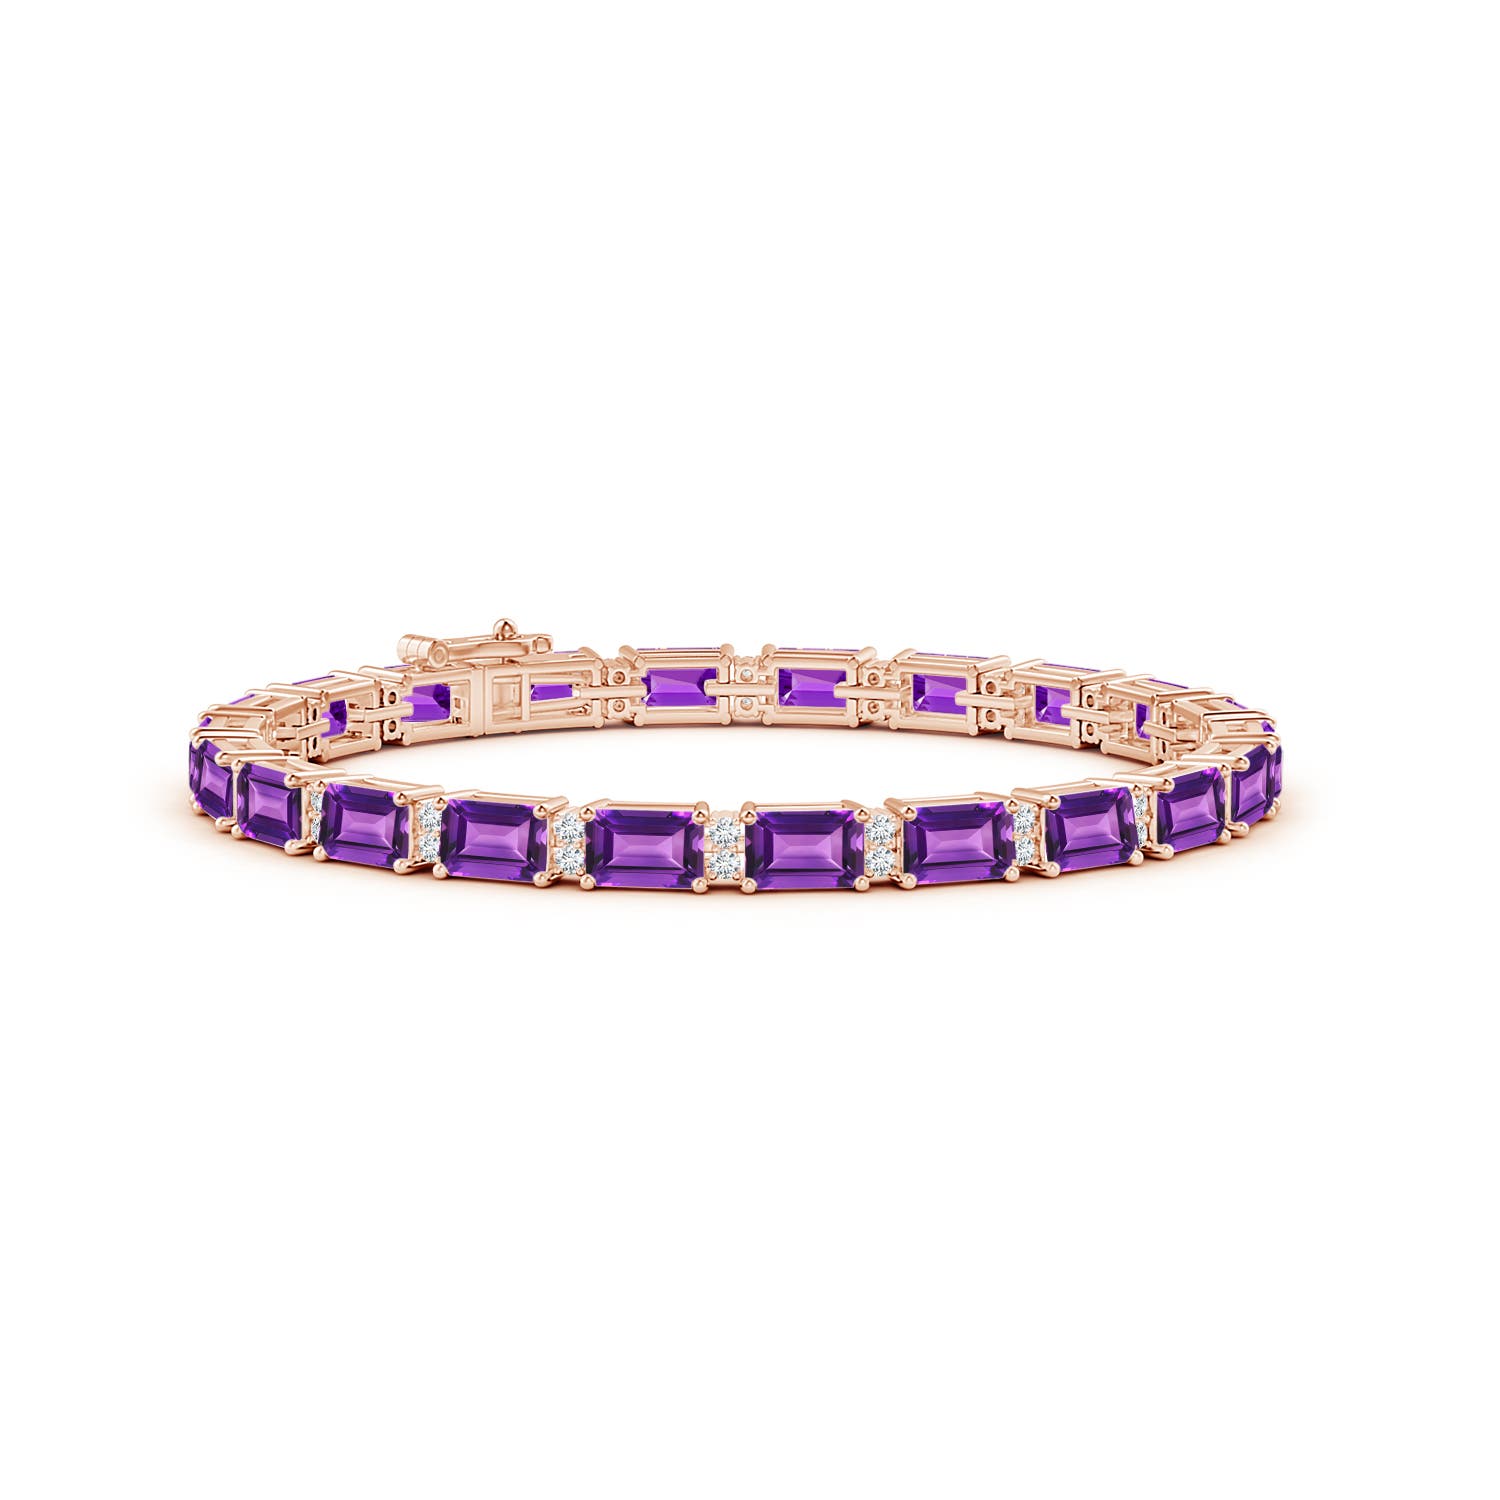 Shop Amethyst Tennis Bracelets for Women | Angara